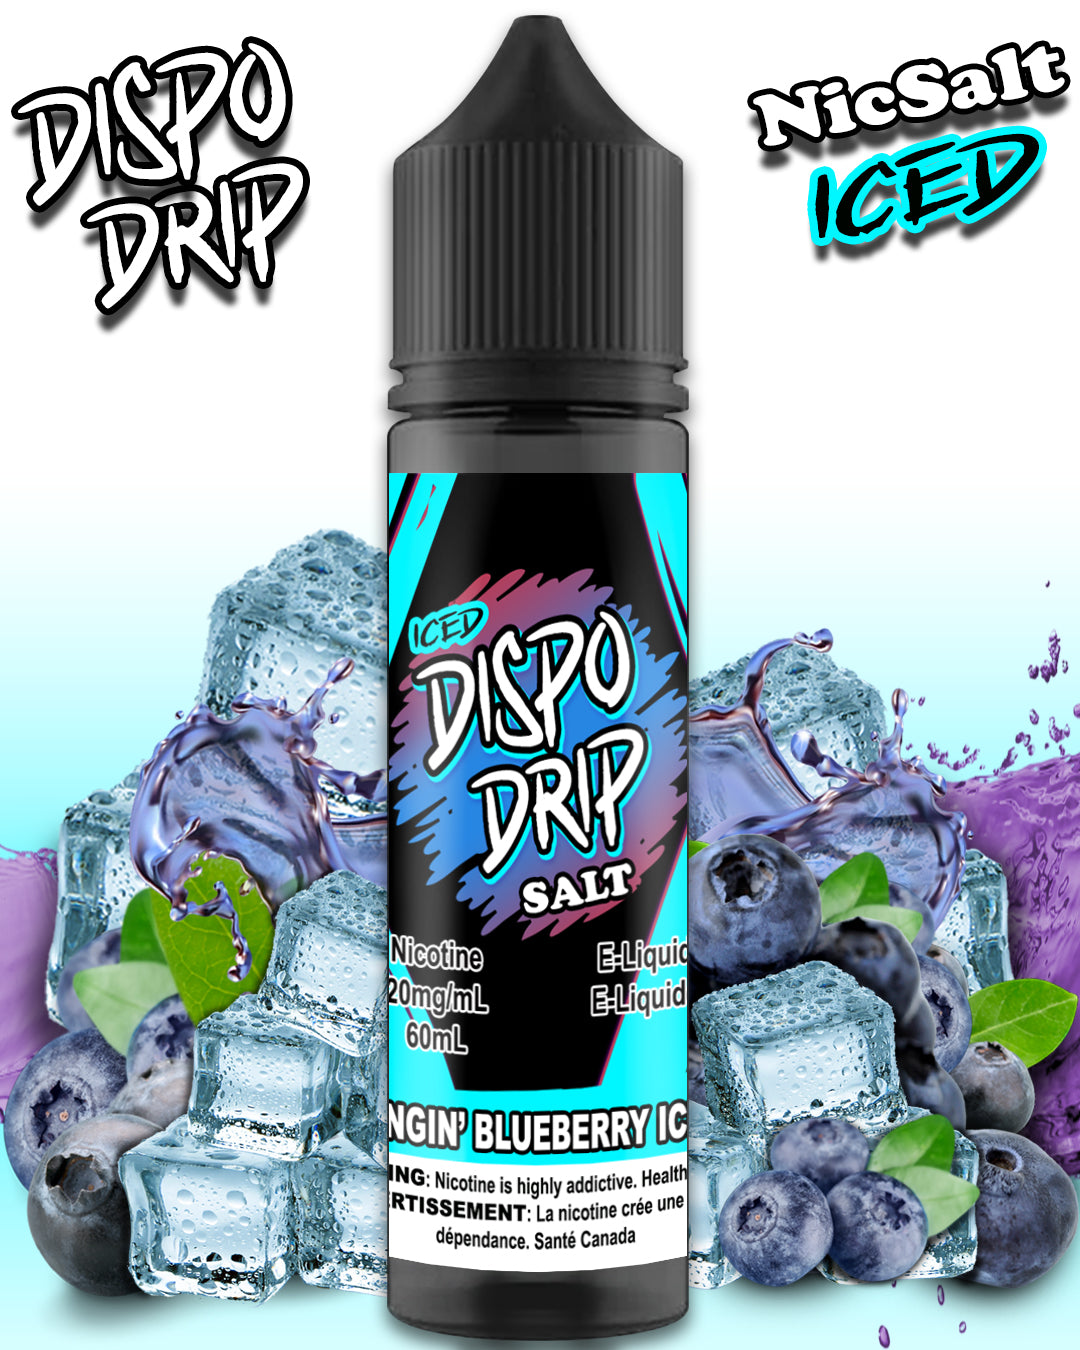 DISPO DRIP - BANGIN BLUEBERRY ICED SALT